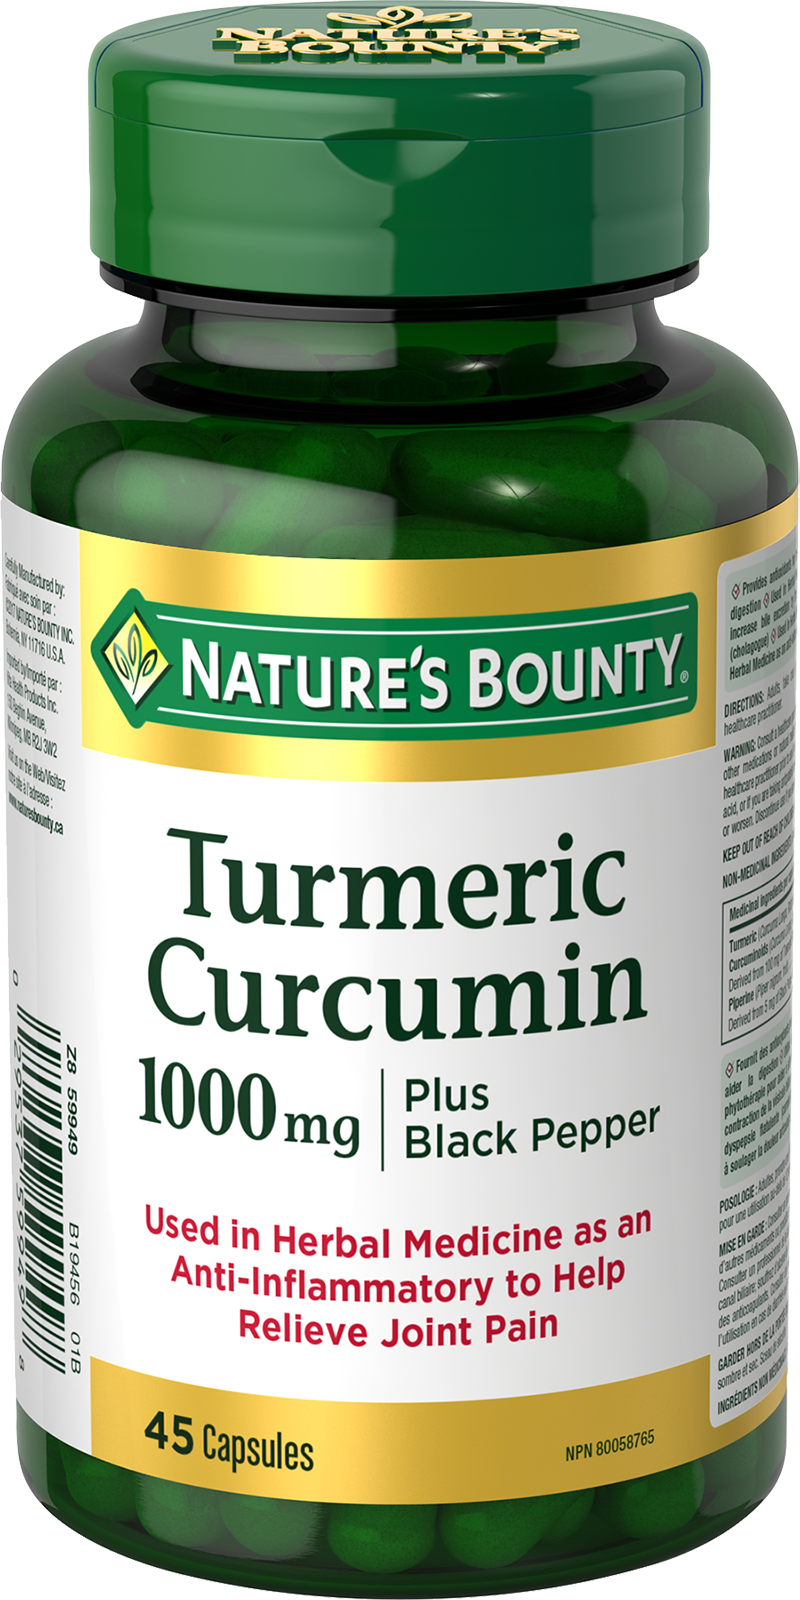 Turmeric Curcumin plus Black Pepper 45 Capsules